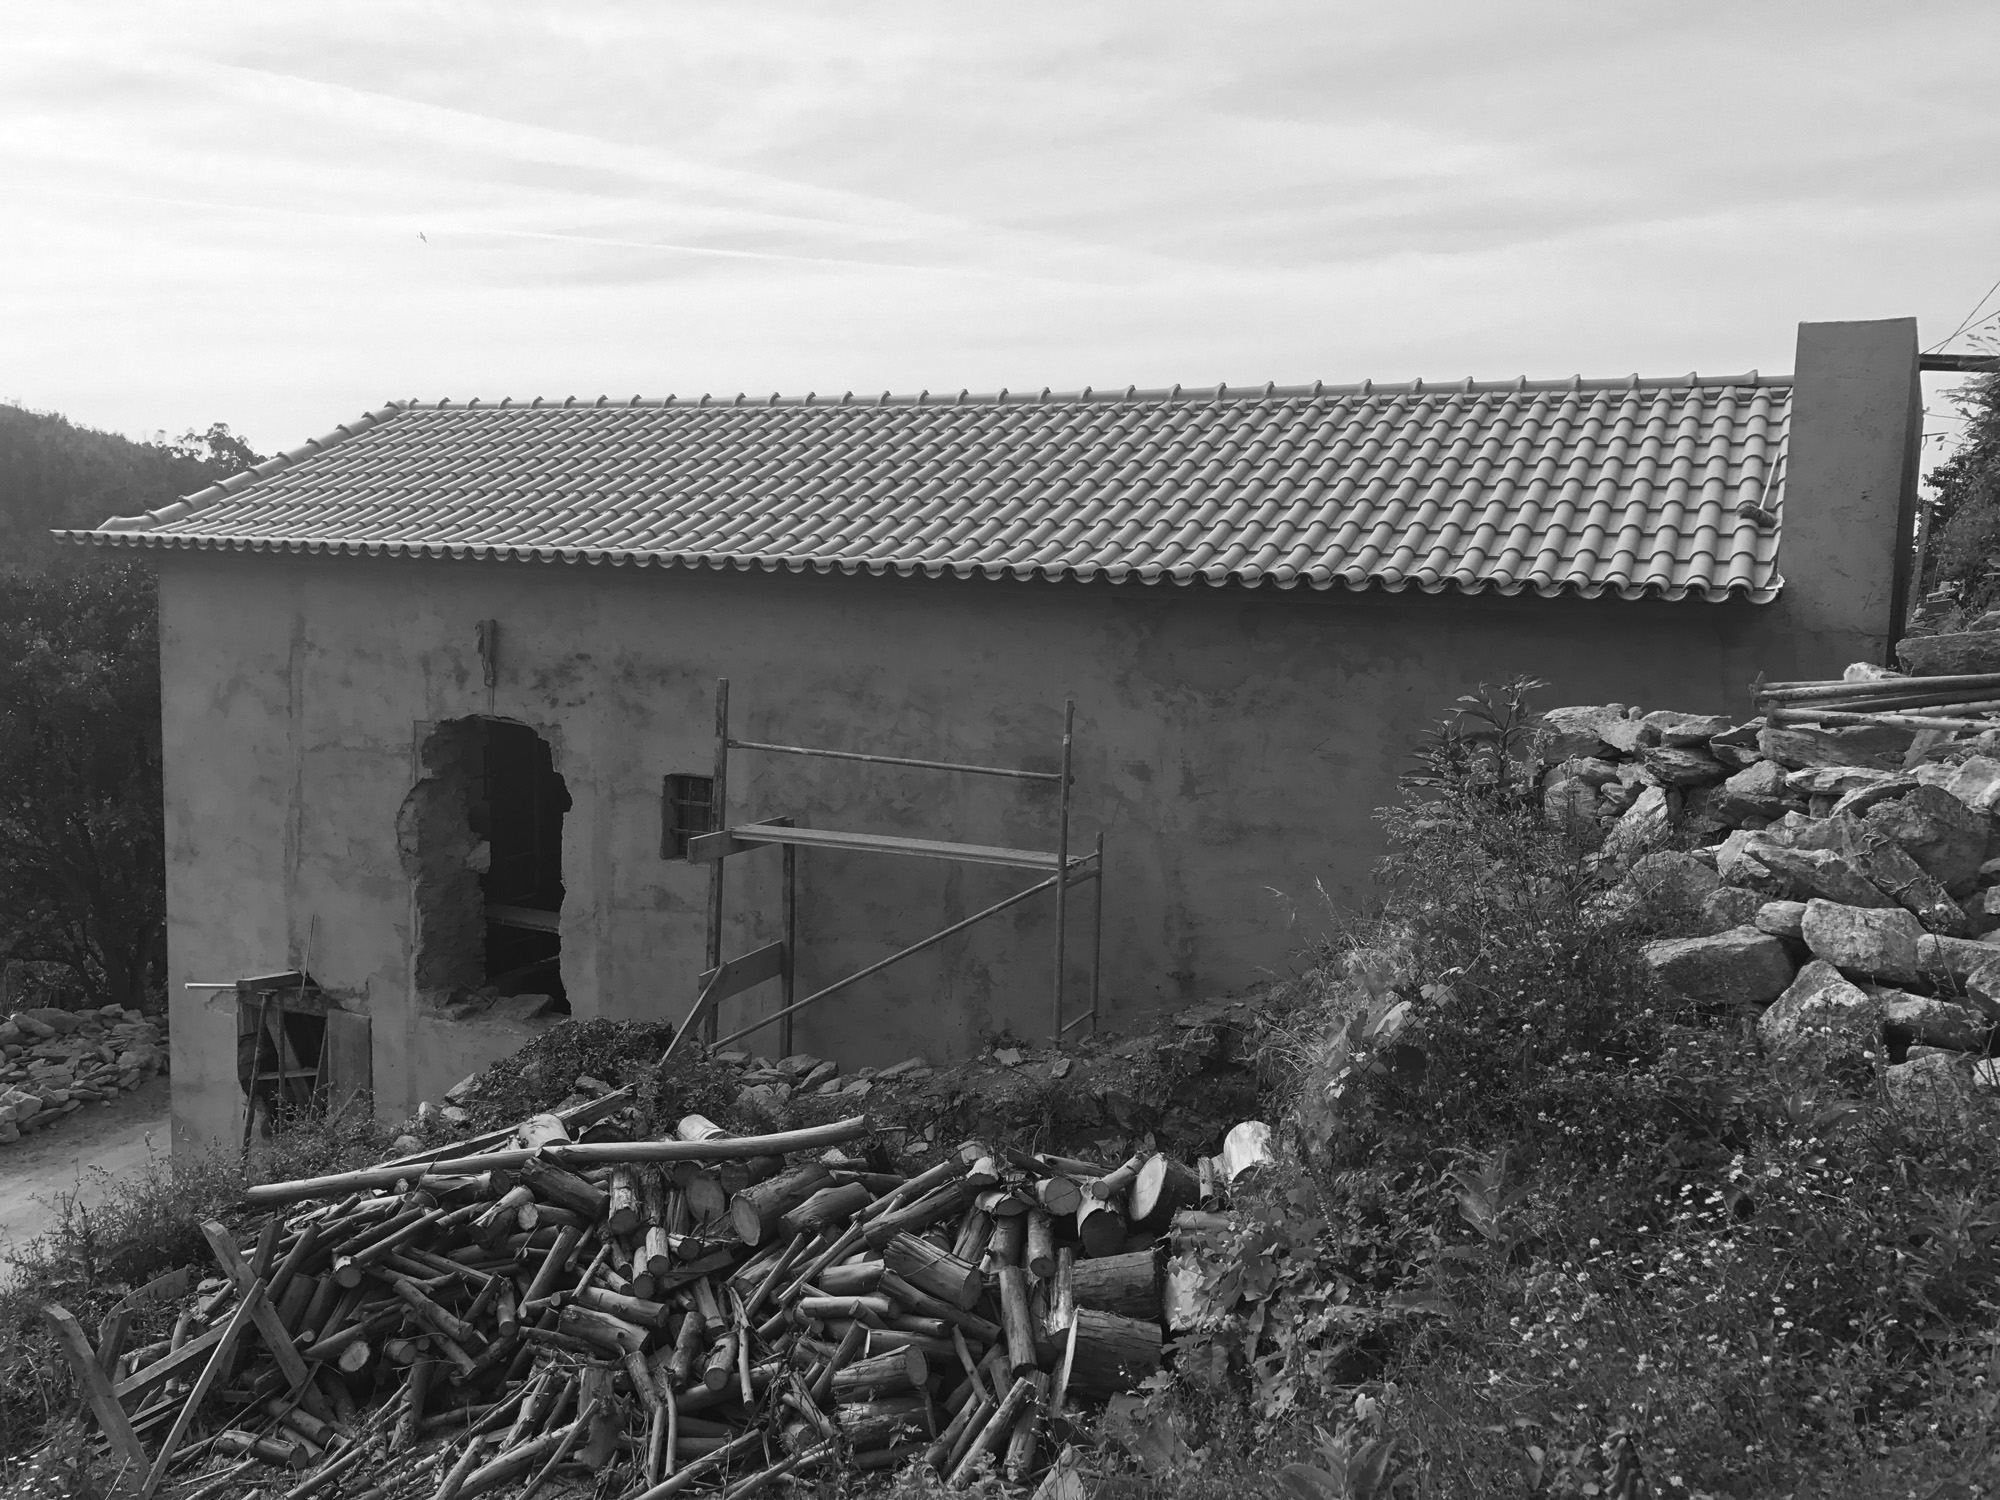 Moradia Folgorosa - Vale de Cambra - EVA atelier - Arquitectura - Obra - Arquitecto - Porto - EVA evolutionary architecture (9).jpg